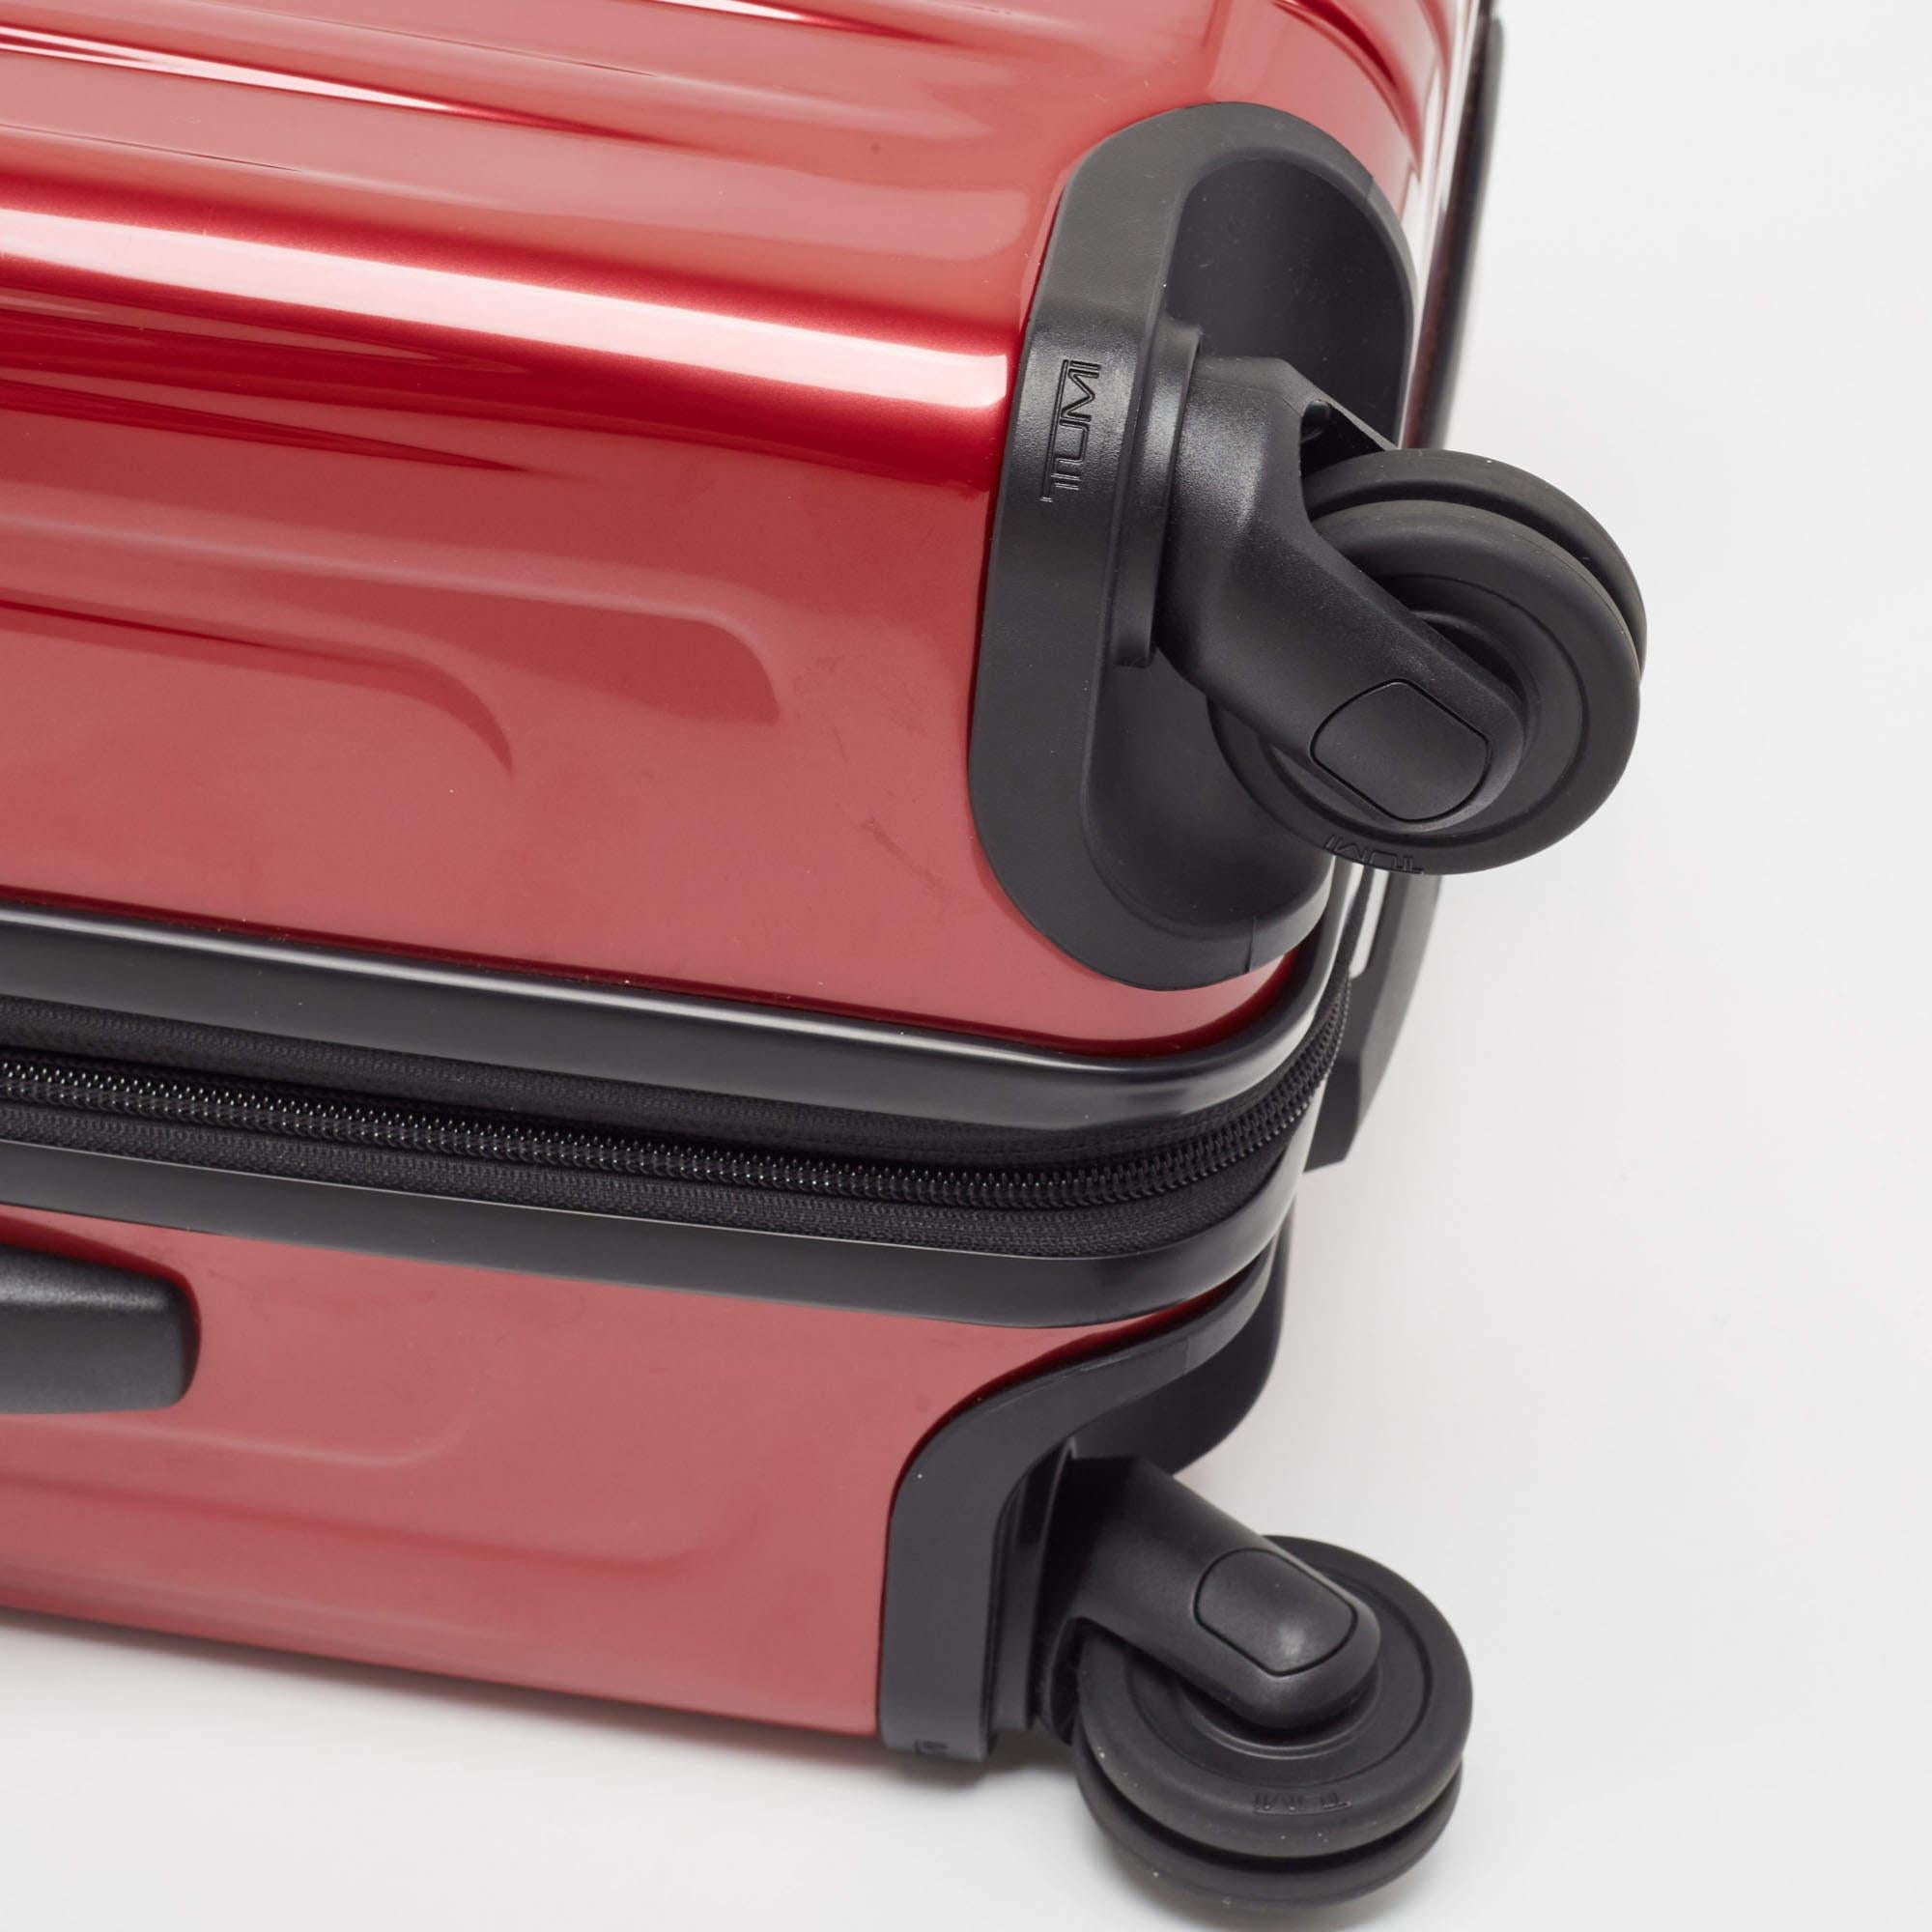 TUMI Rote 4 Rädern V4 International Expandable Carry On Luggage, ausziehbar im Angebot 3